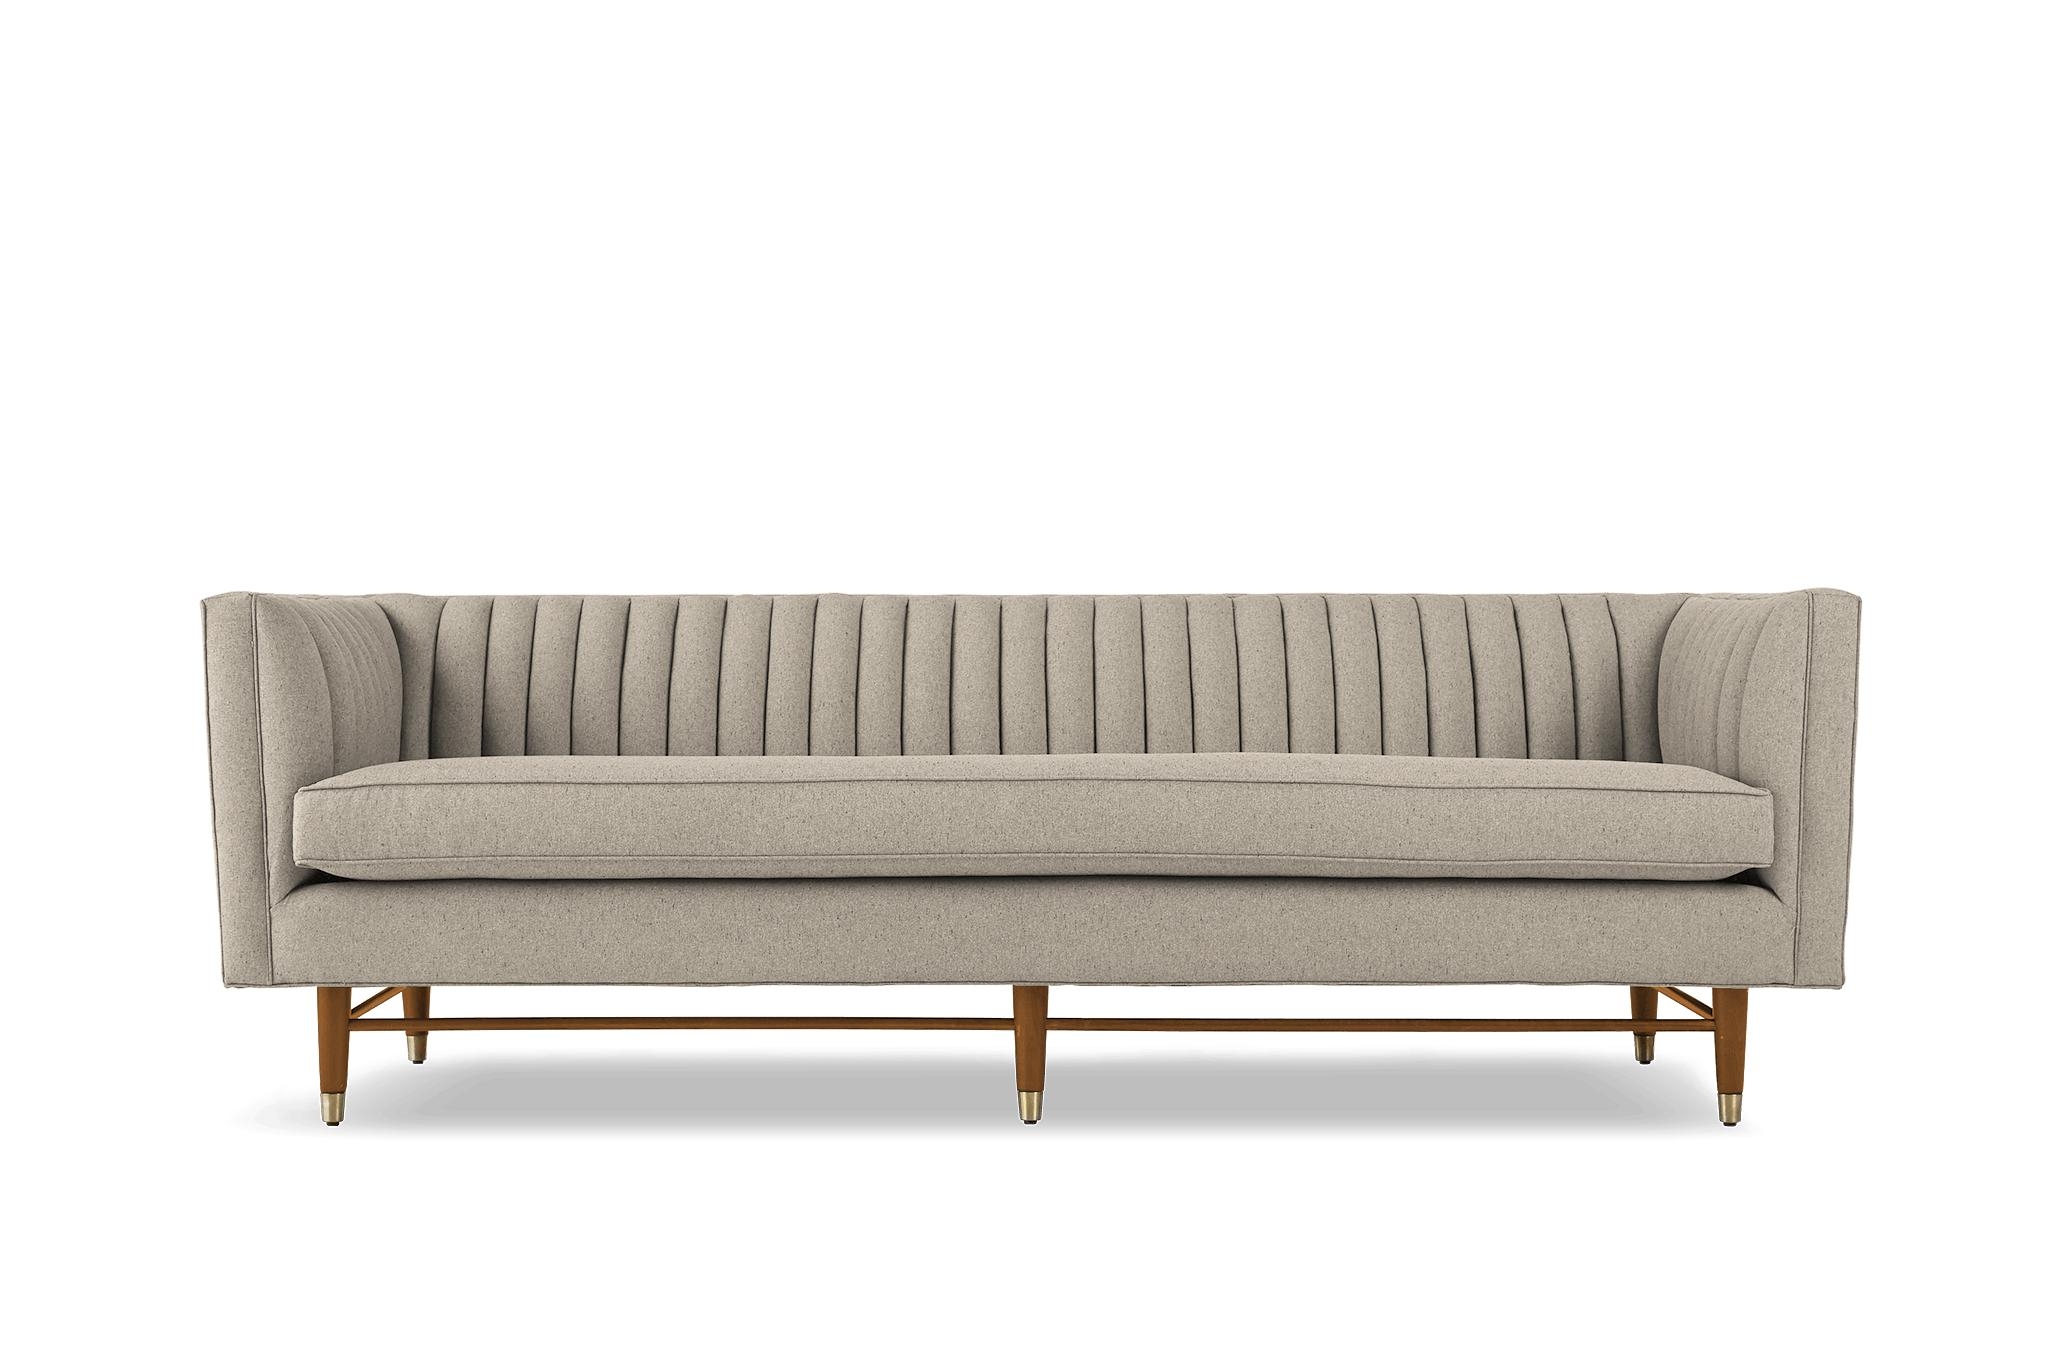 Beige/White Chelsea Mid Century Modern Sofa - Cody Sandstone - Mocha - Image 0